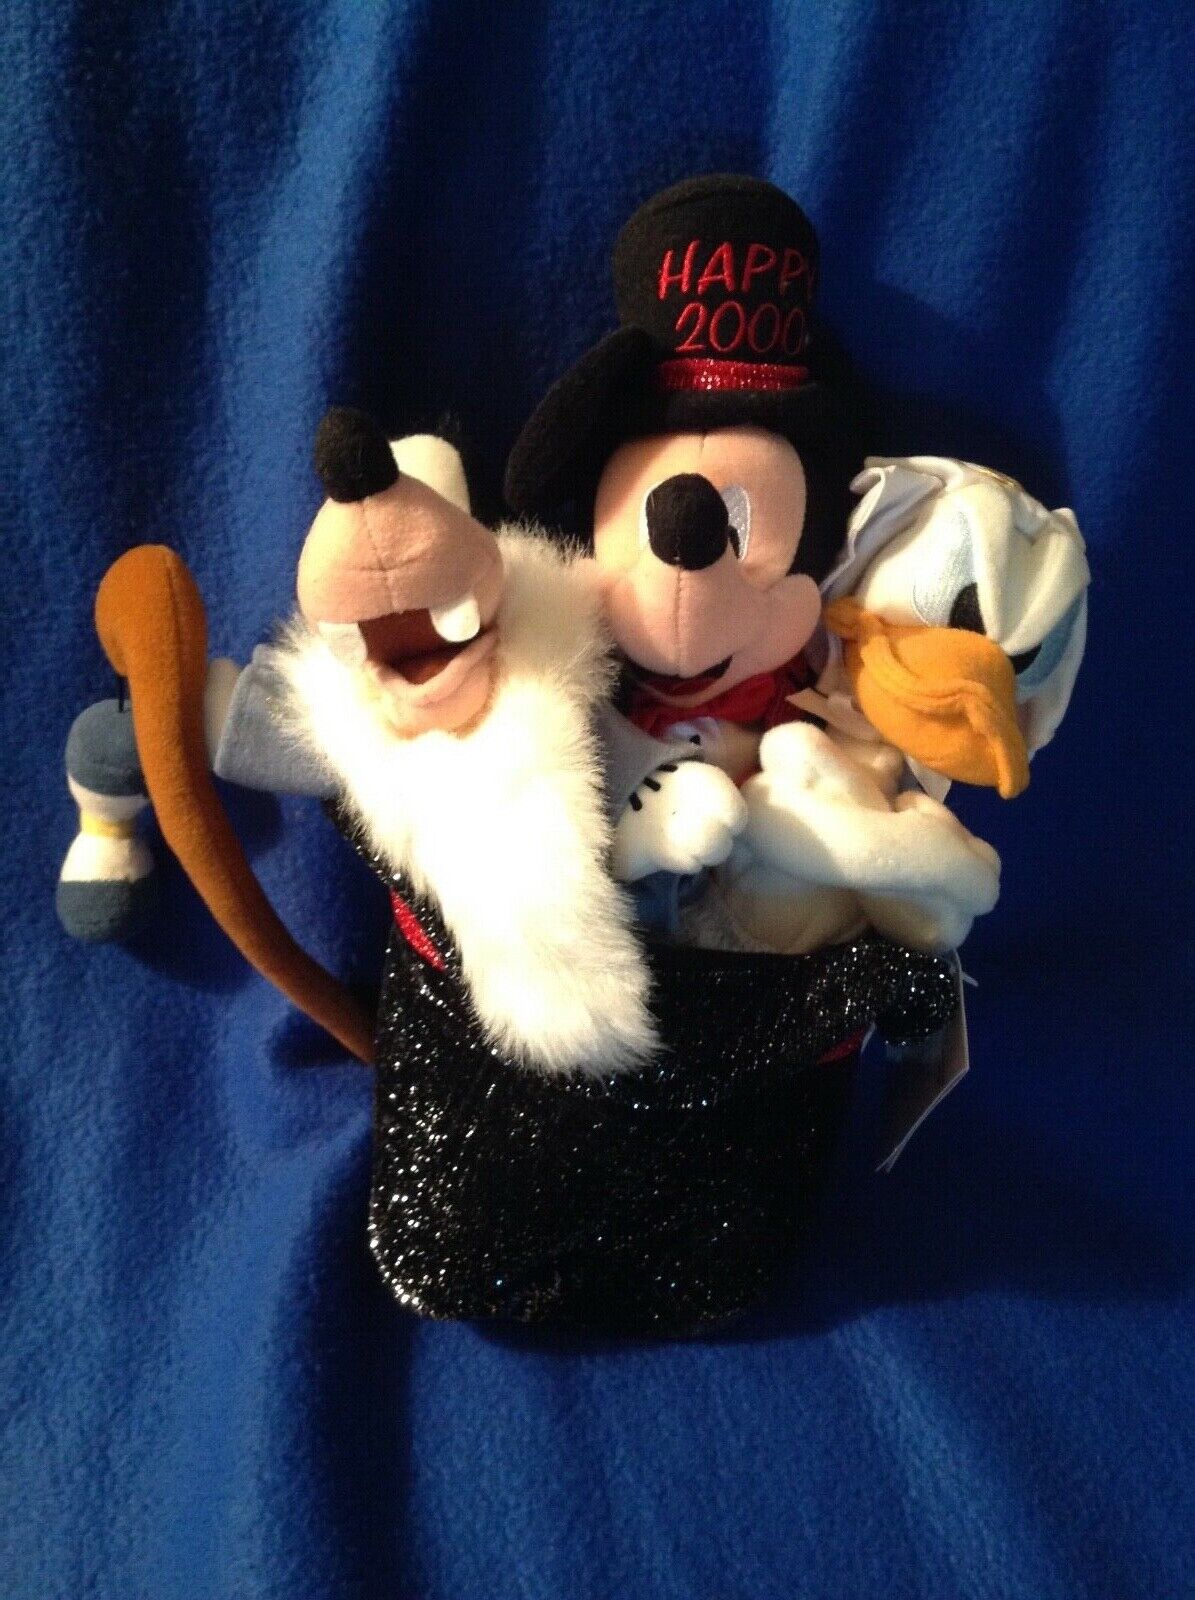 Disney Happy New Year 2000 Top Hat Mickey Mouse, Donald, Goofy Plush Set - HTF